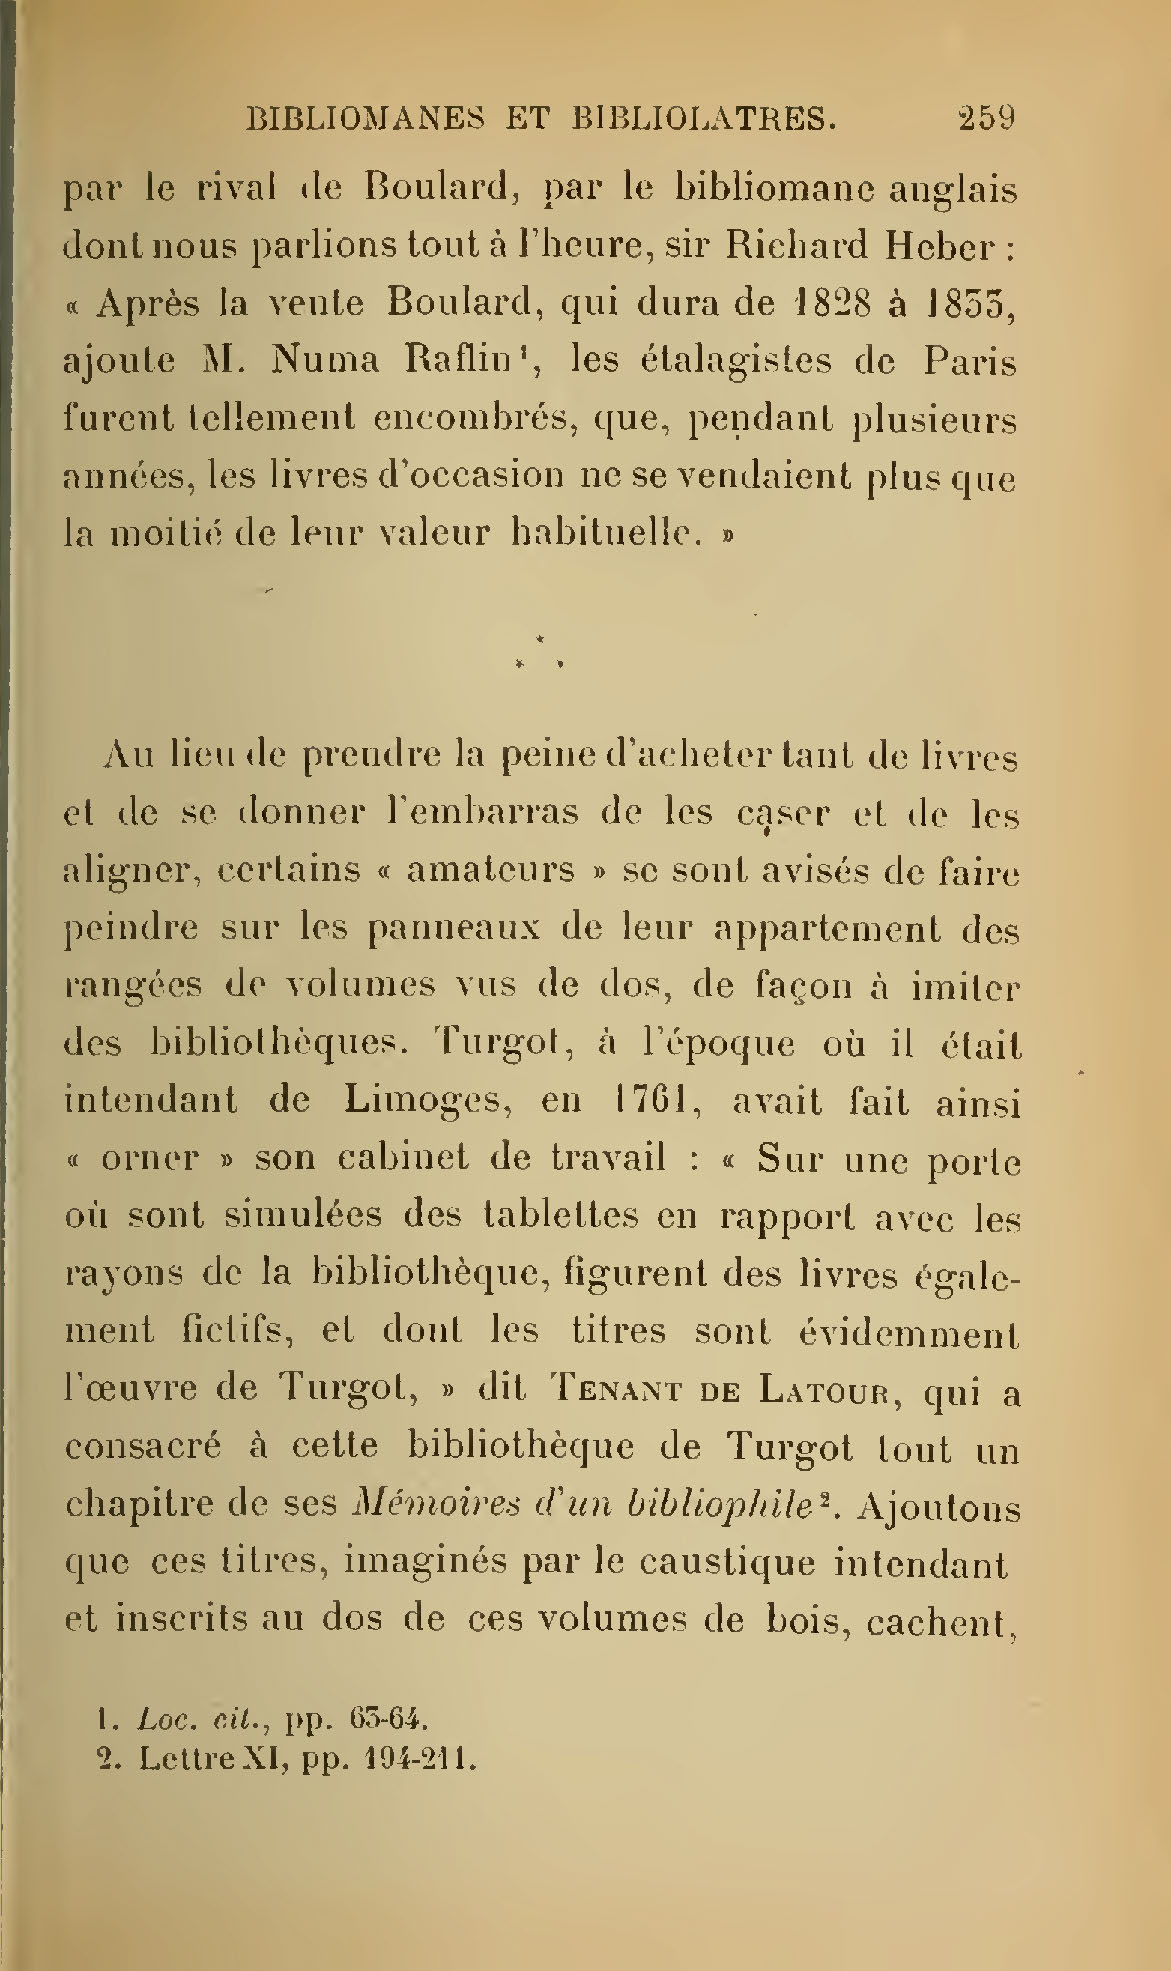 Albert Cim, Le Livre, t. II, p. 259.